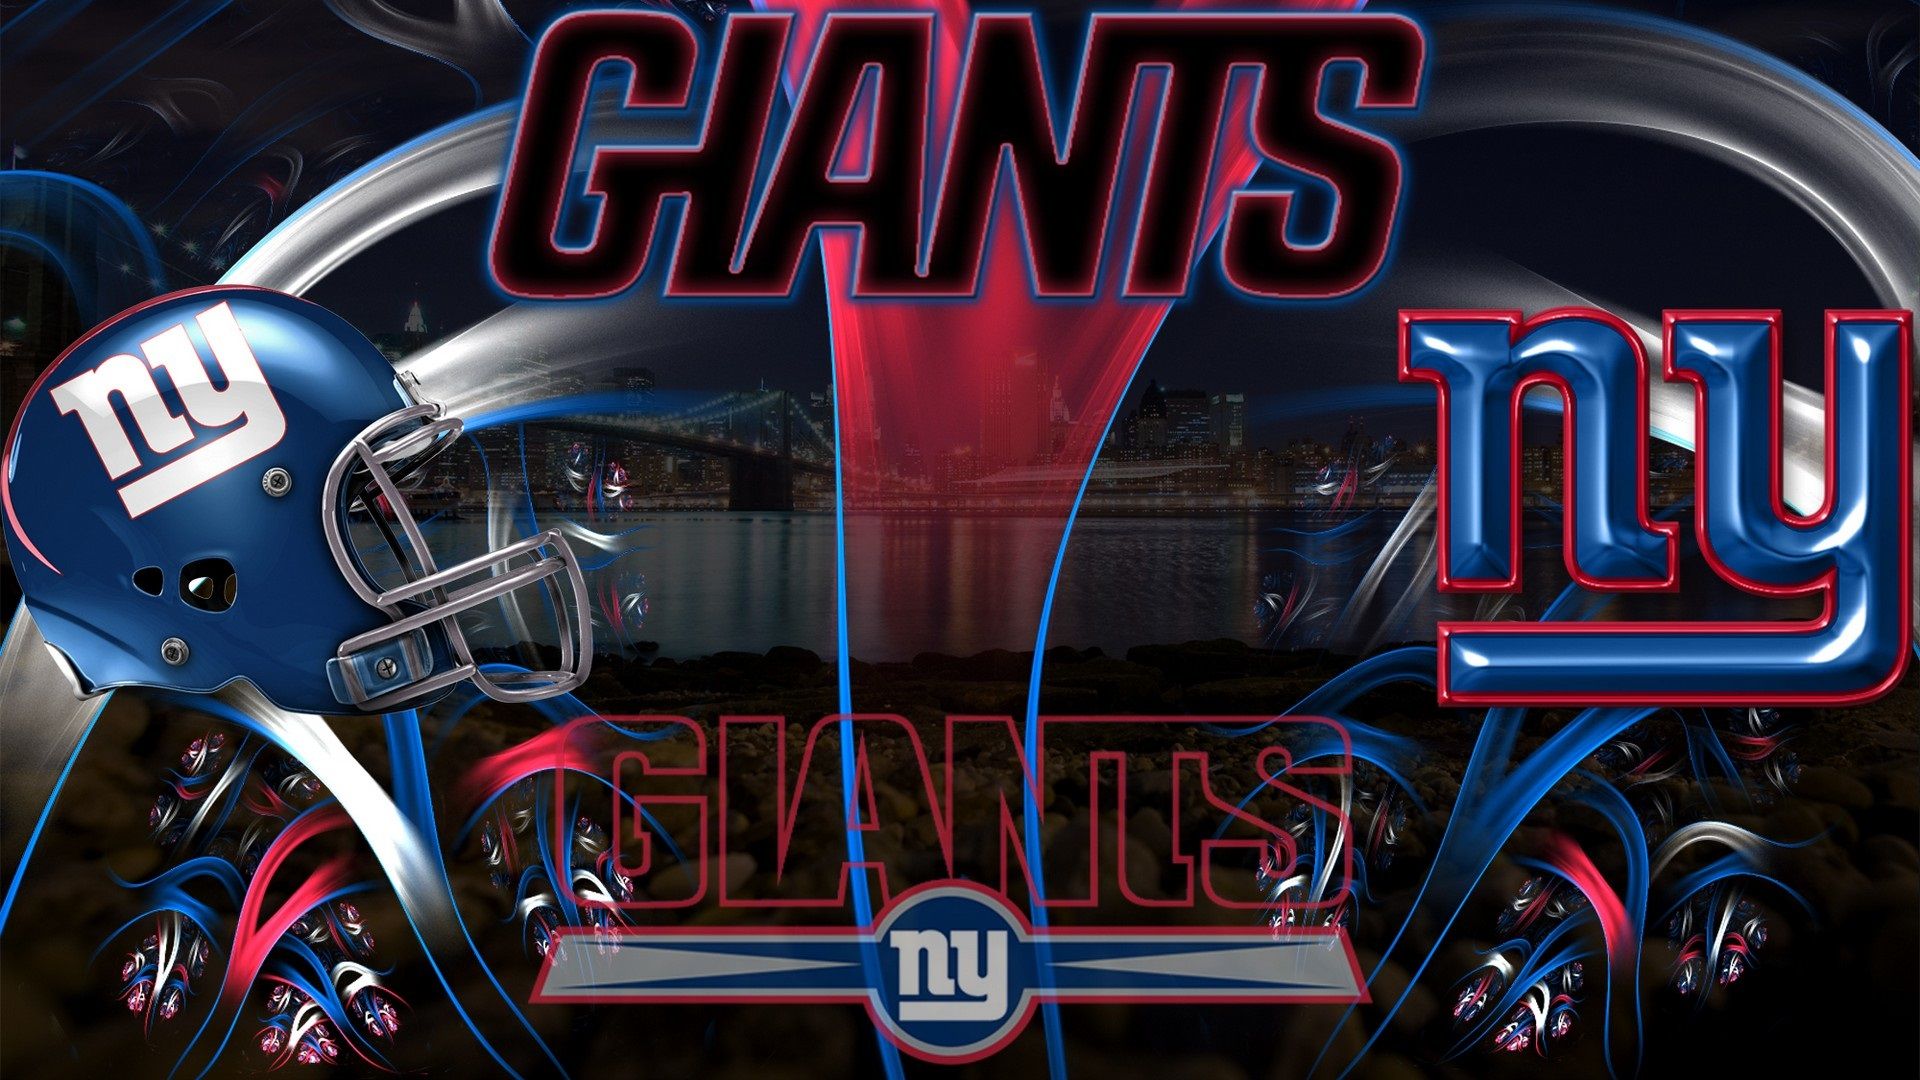 New York Giants Mac Background NFL Football Wallpaper. Nfl football wallpaper, New york giants, Mac background